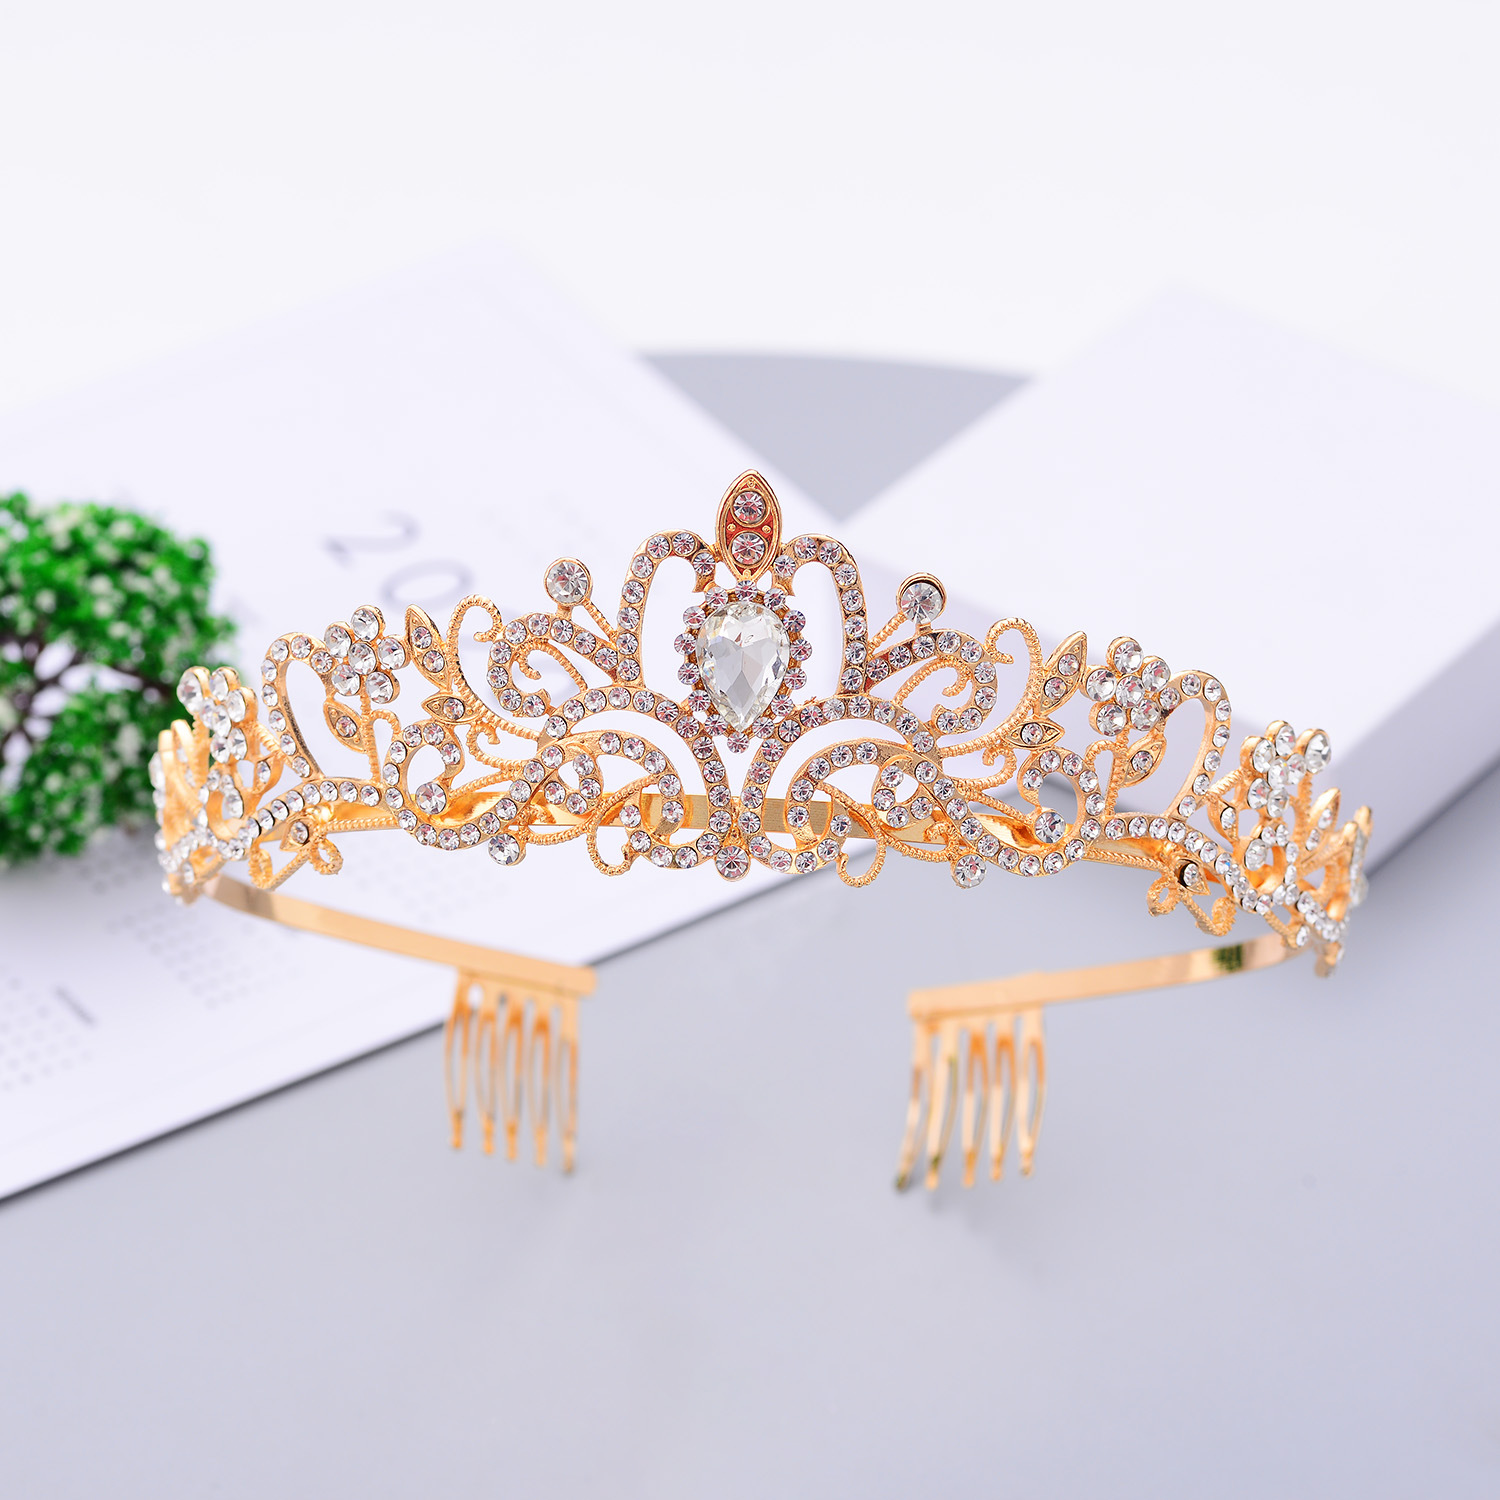 Hot sale Crystal Diamond Bride wedding hair crown birthday headdress hair accessories ball crown show headband